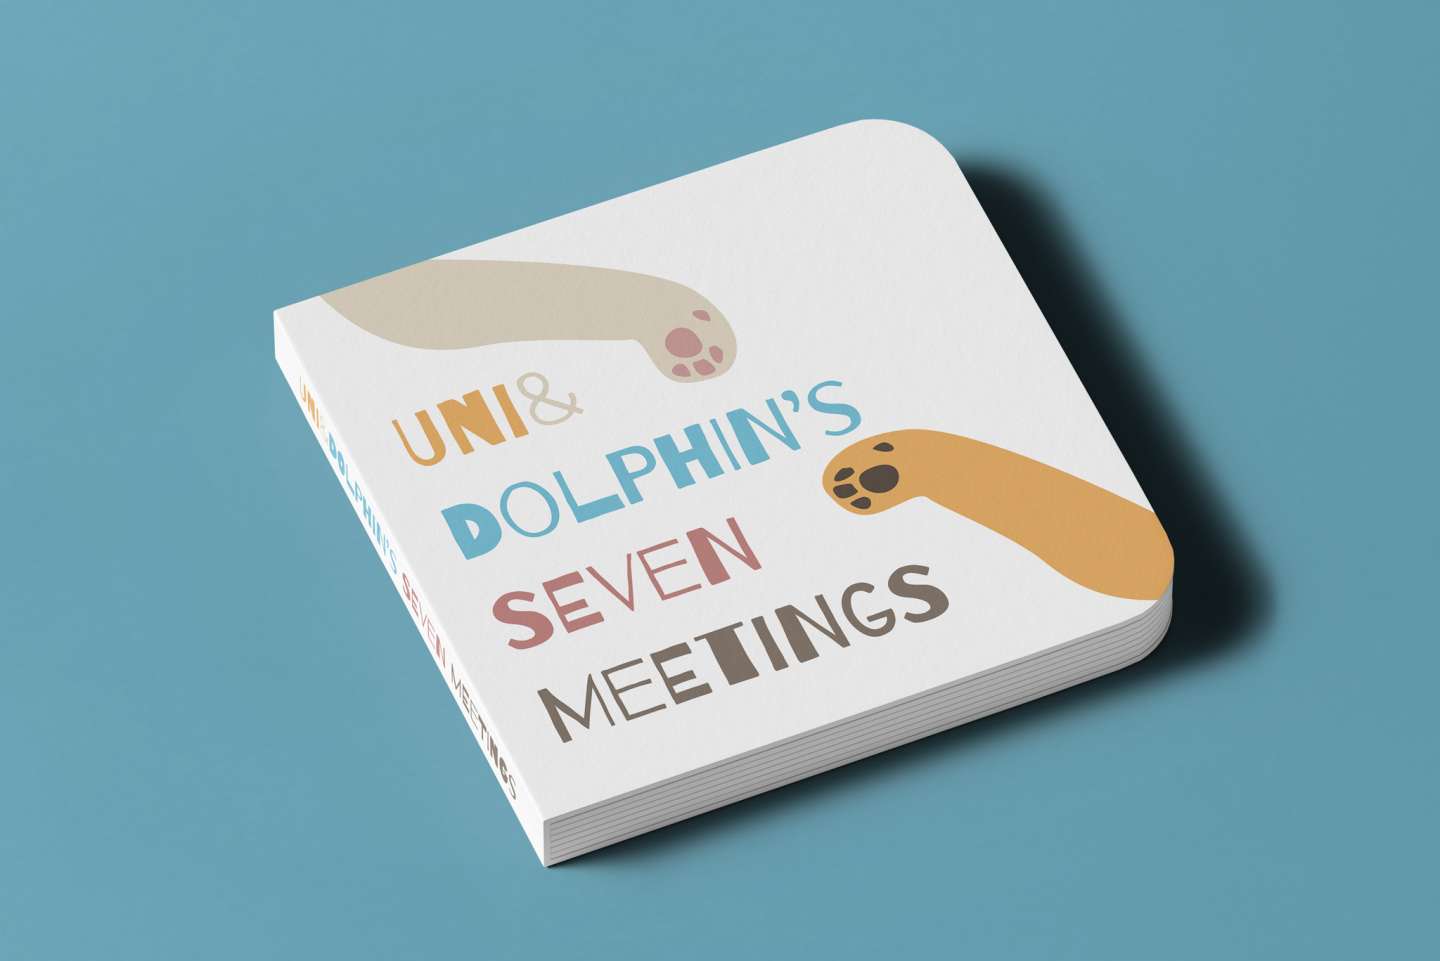 Uni&Dolphin's Seven Meetings